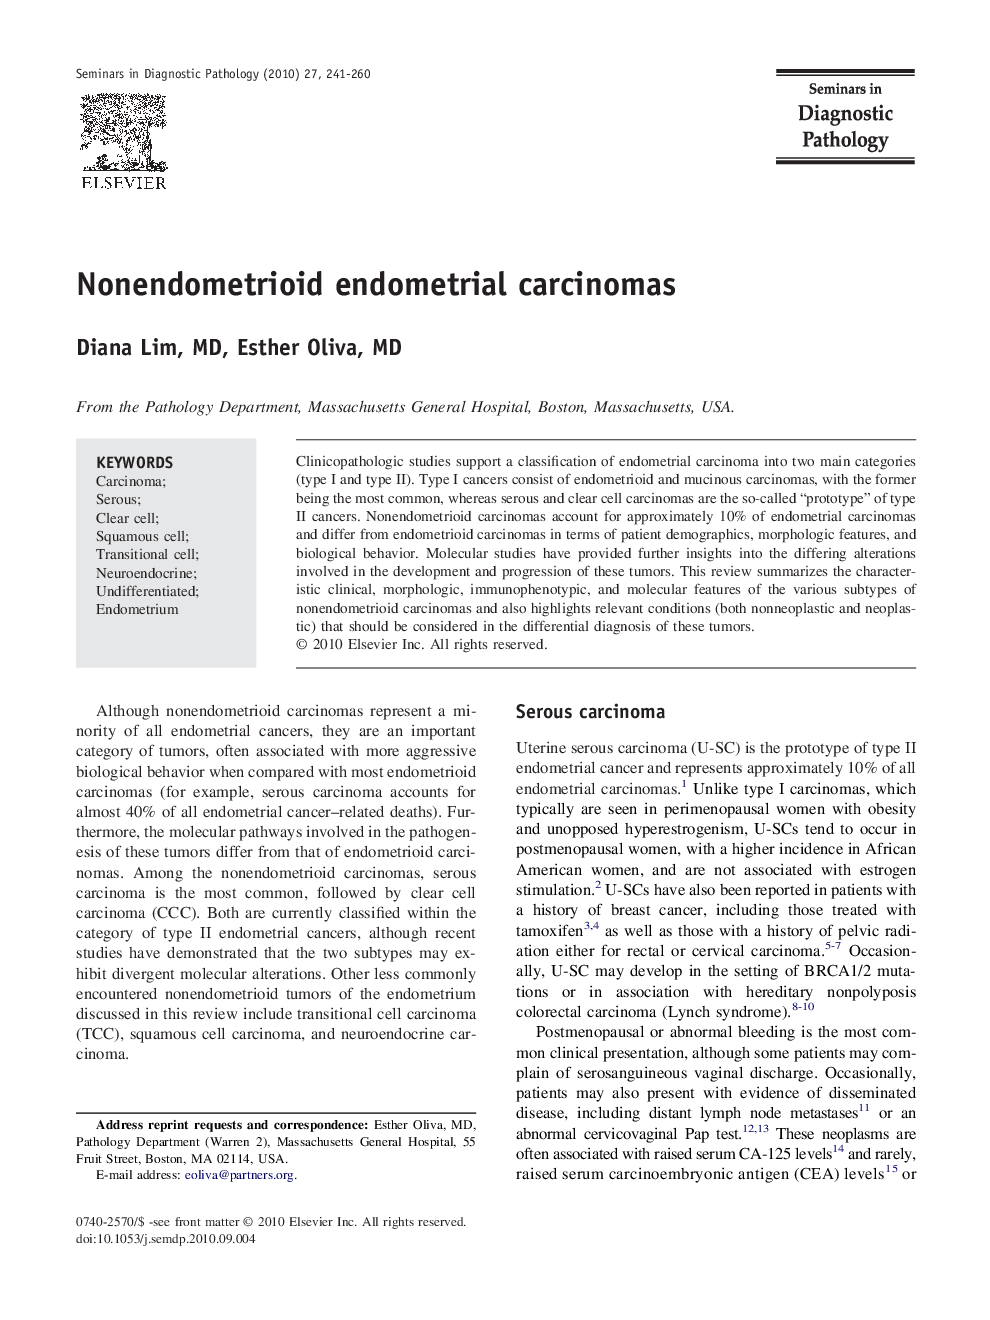 Nonendometrioid endometrial carcinomas